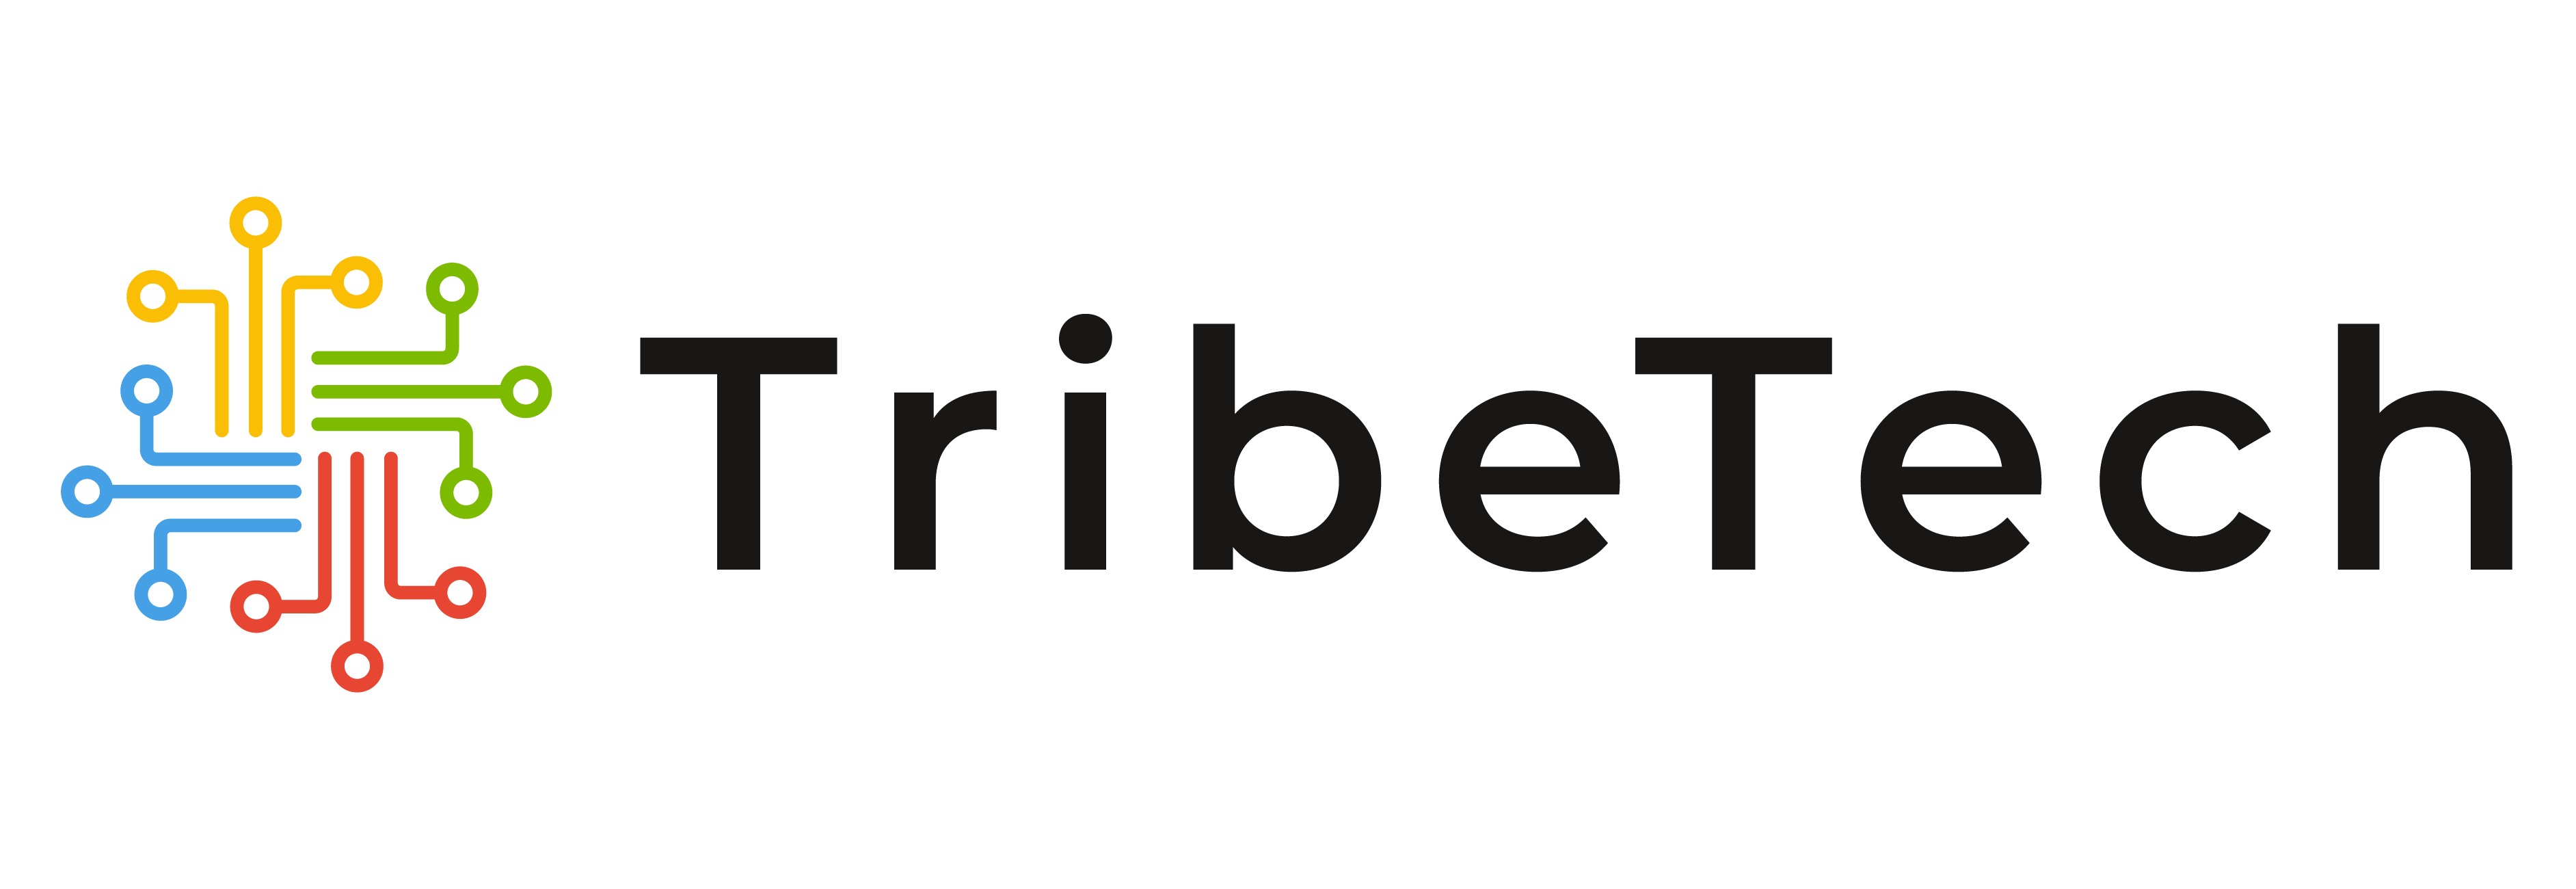 Tribetech_Logo_Set_Combination_Mark_Variant_RGB